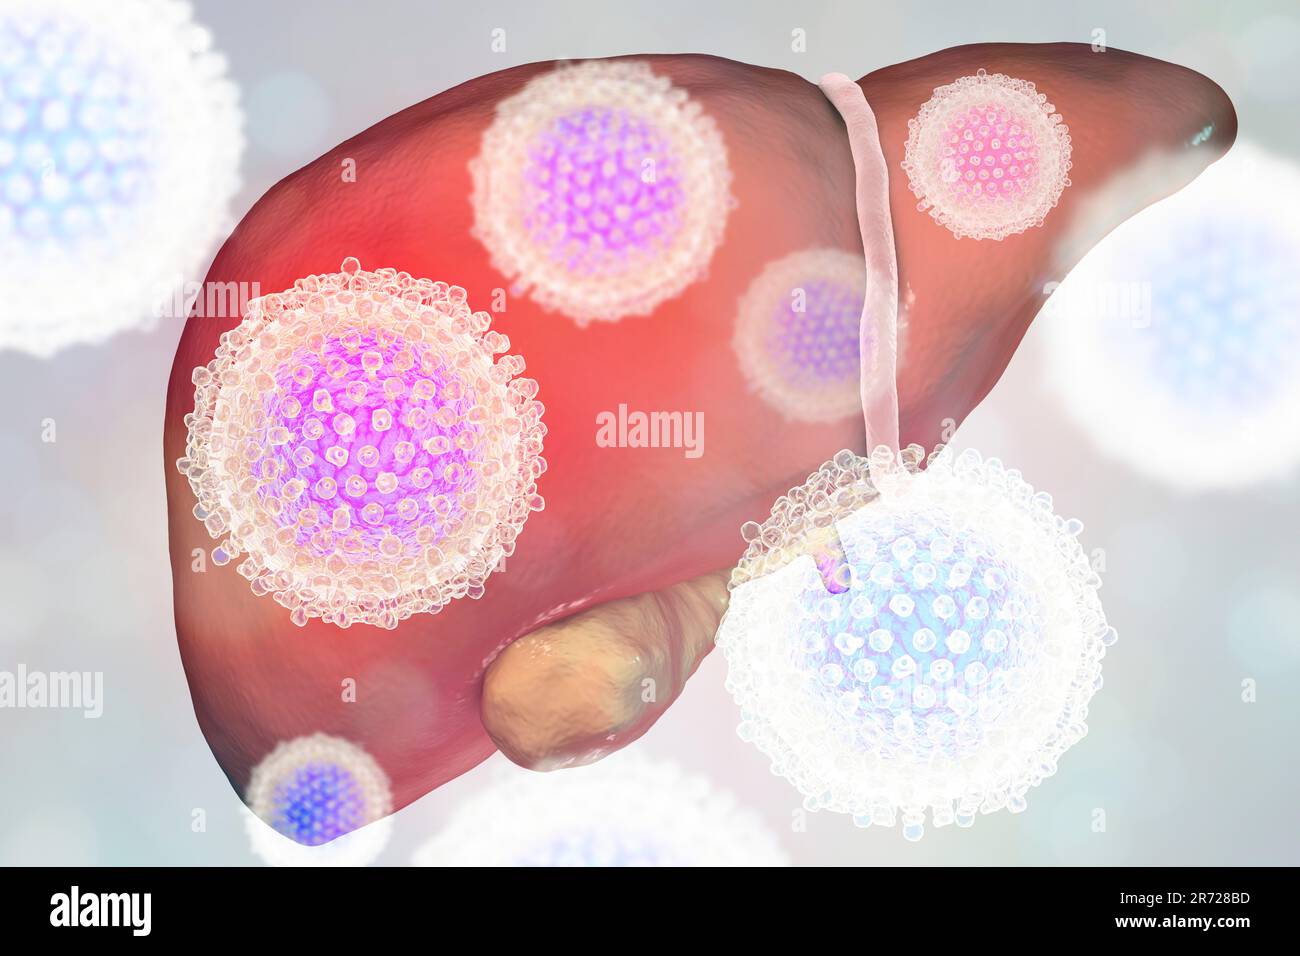 Leber mit Hepatitis und Nahaufnahme Blick auf Hepatitis C-Viren, Abbildung. Stockfoto